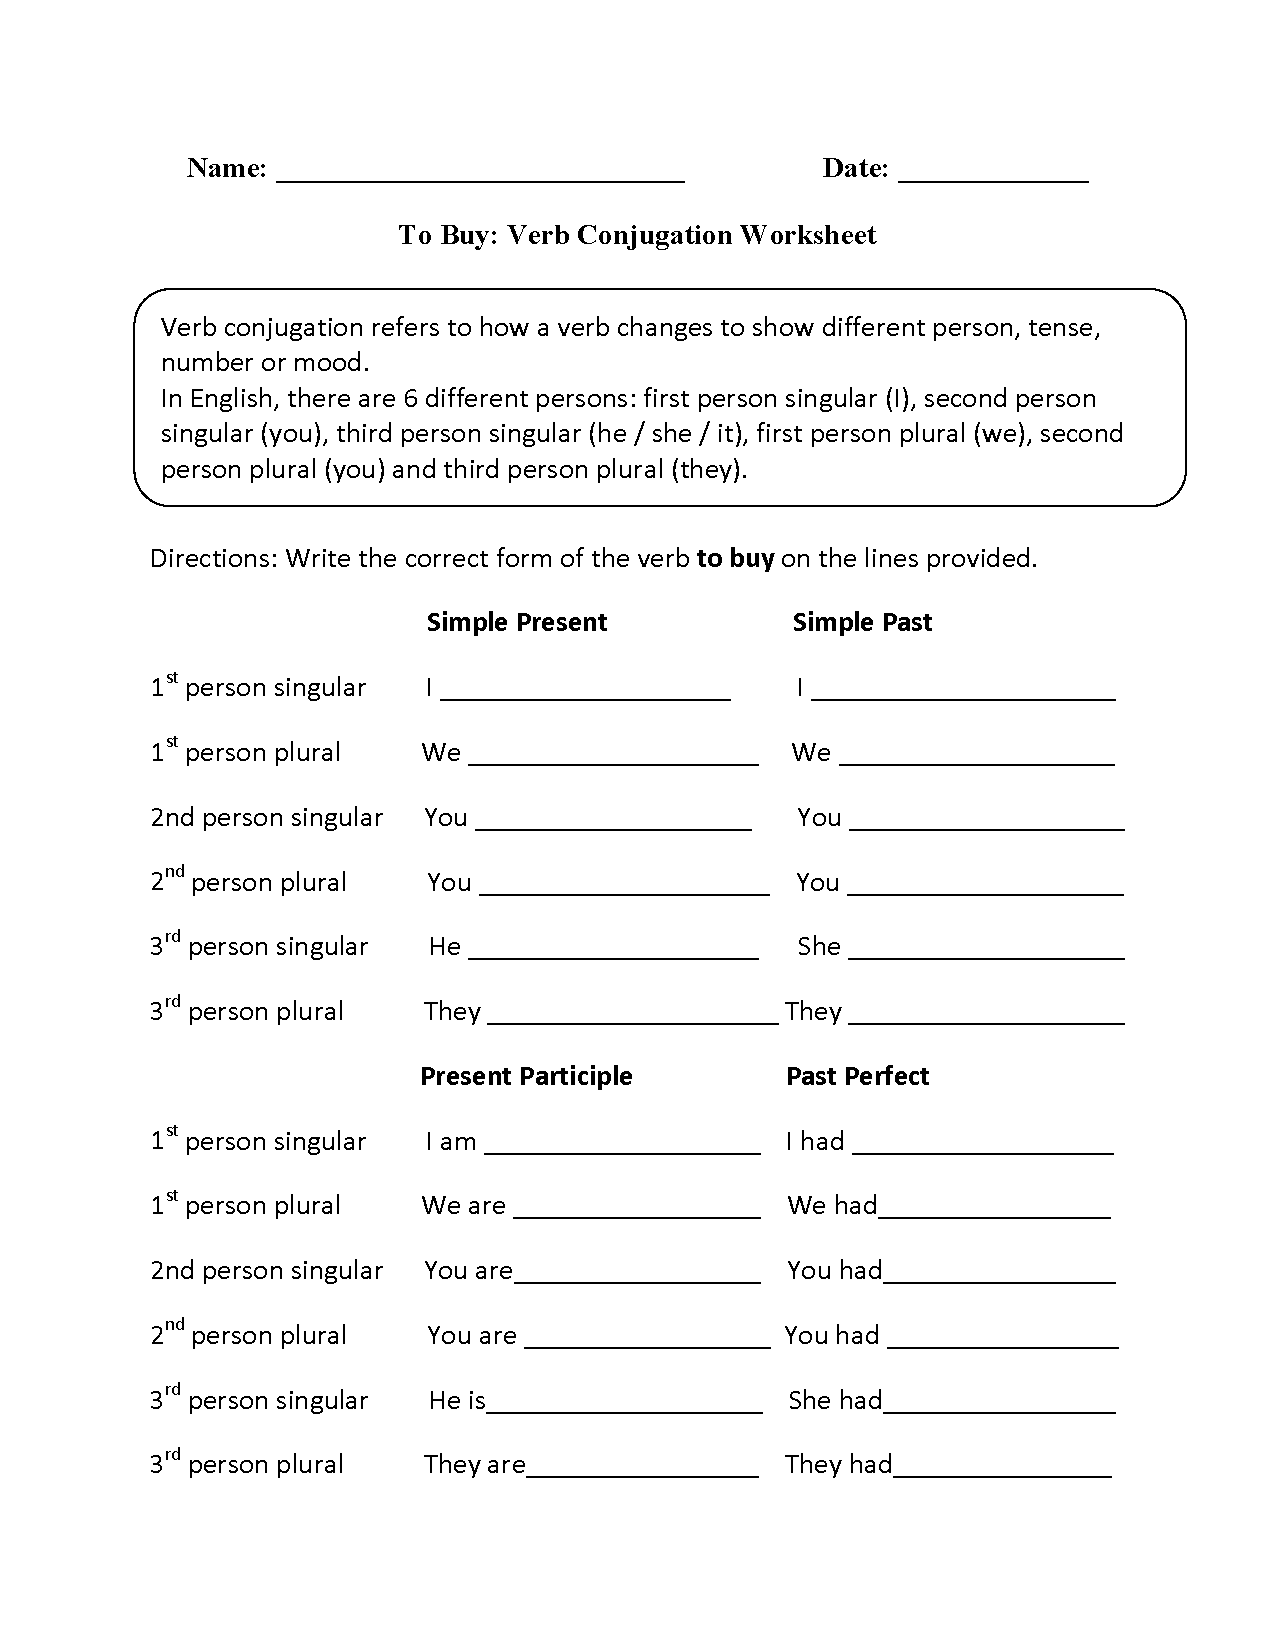 To Buy Verb Conjugation Worksheets